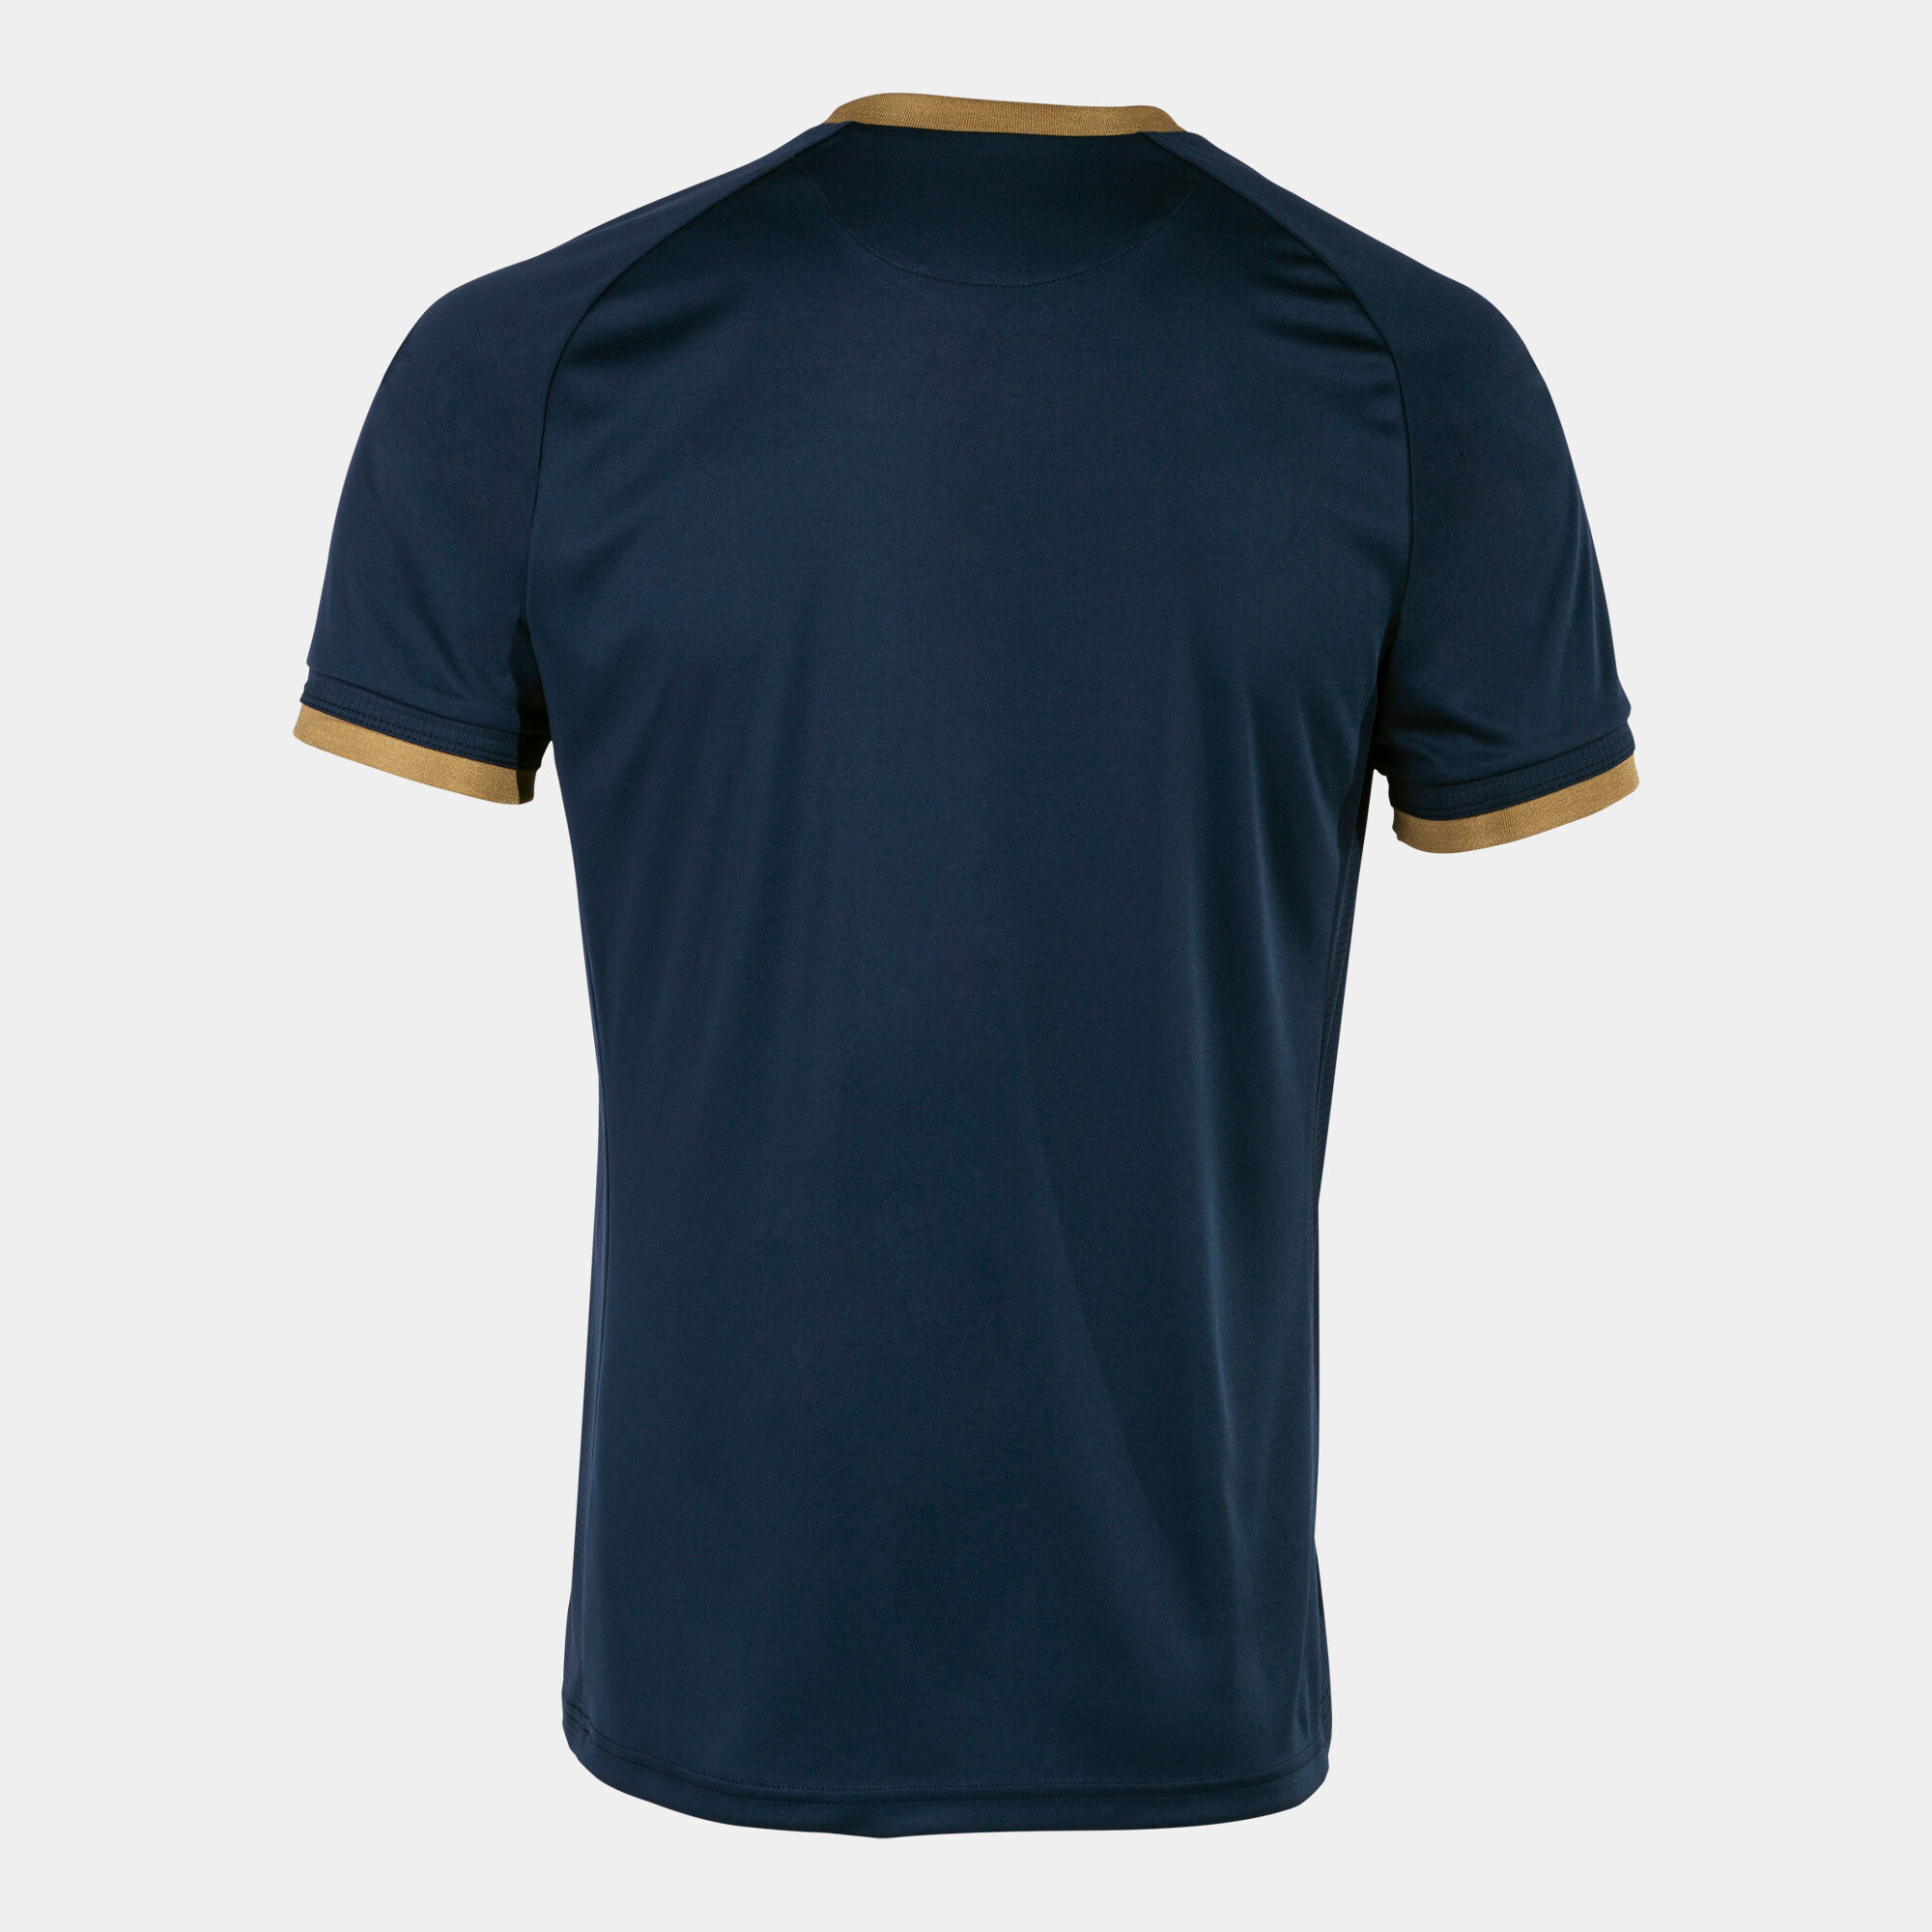 Shirt short sleeve man Gold V navy blue